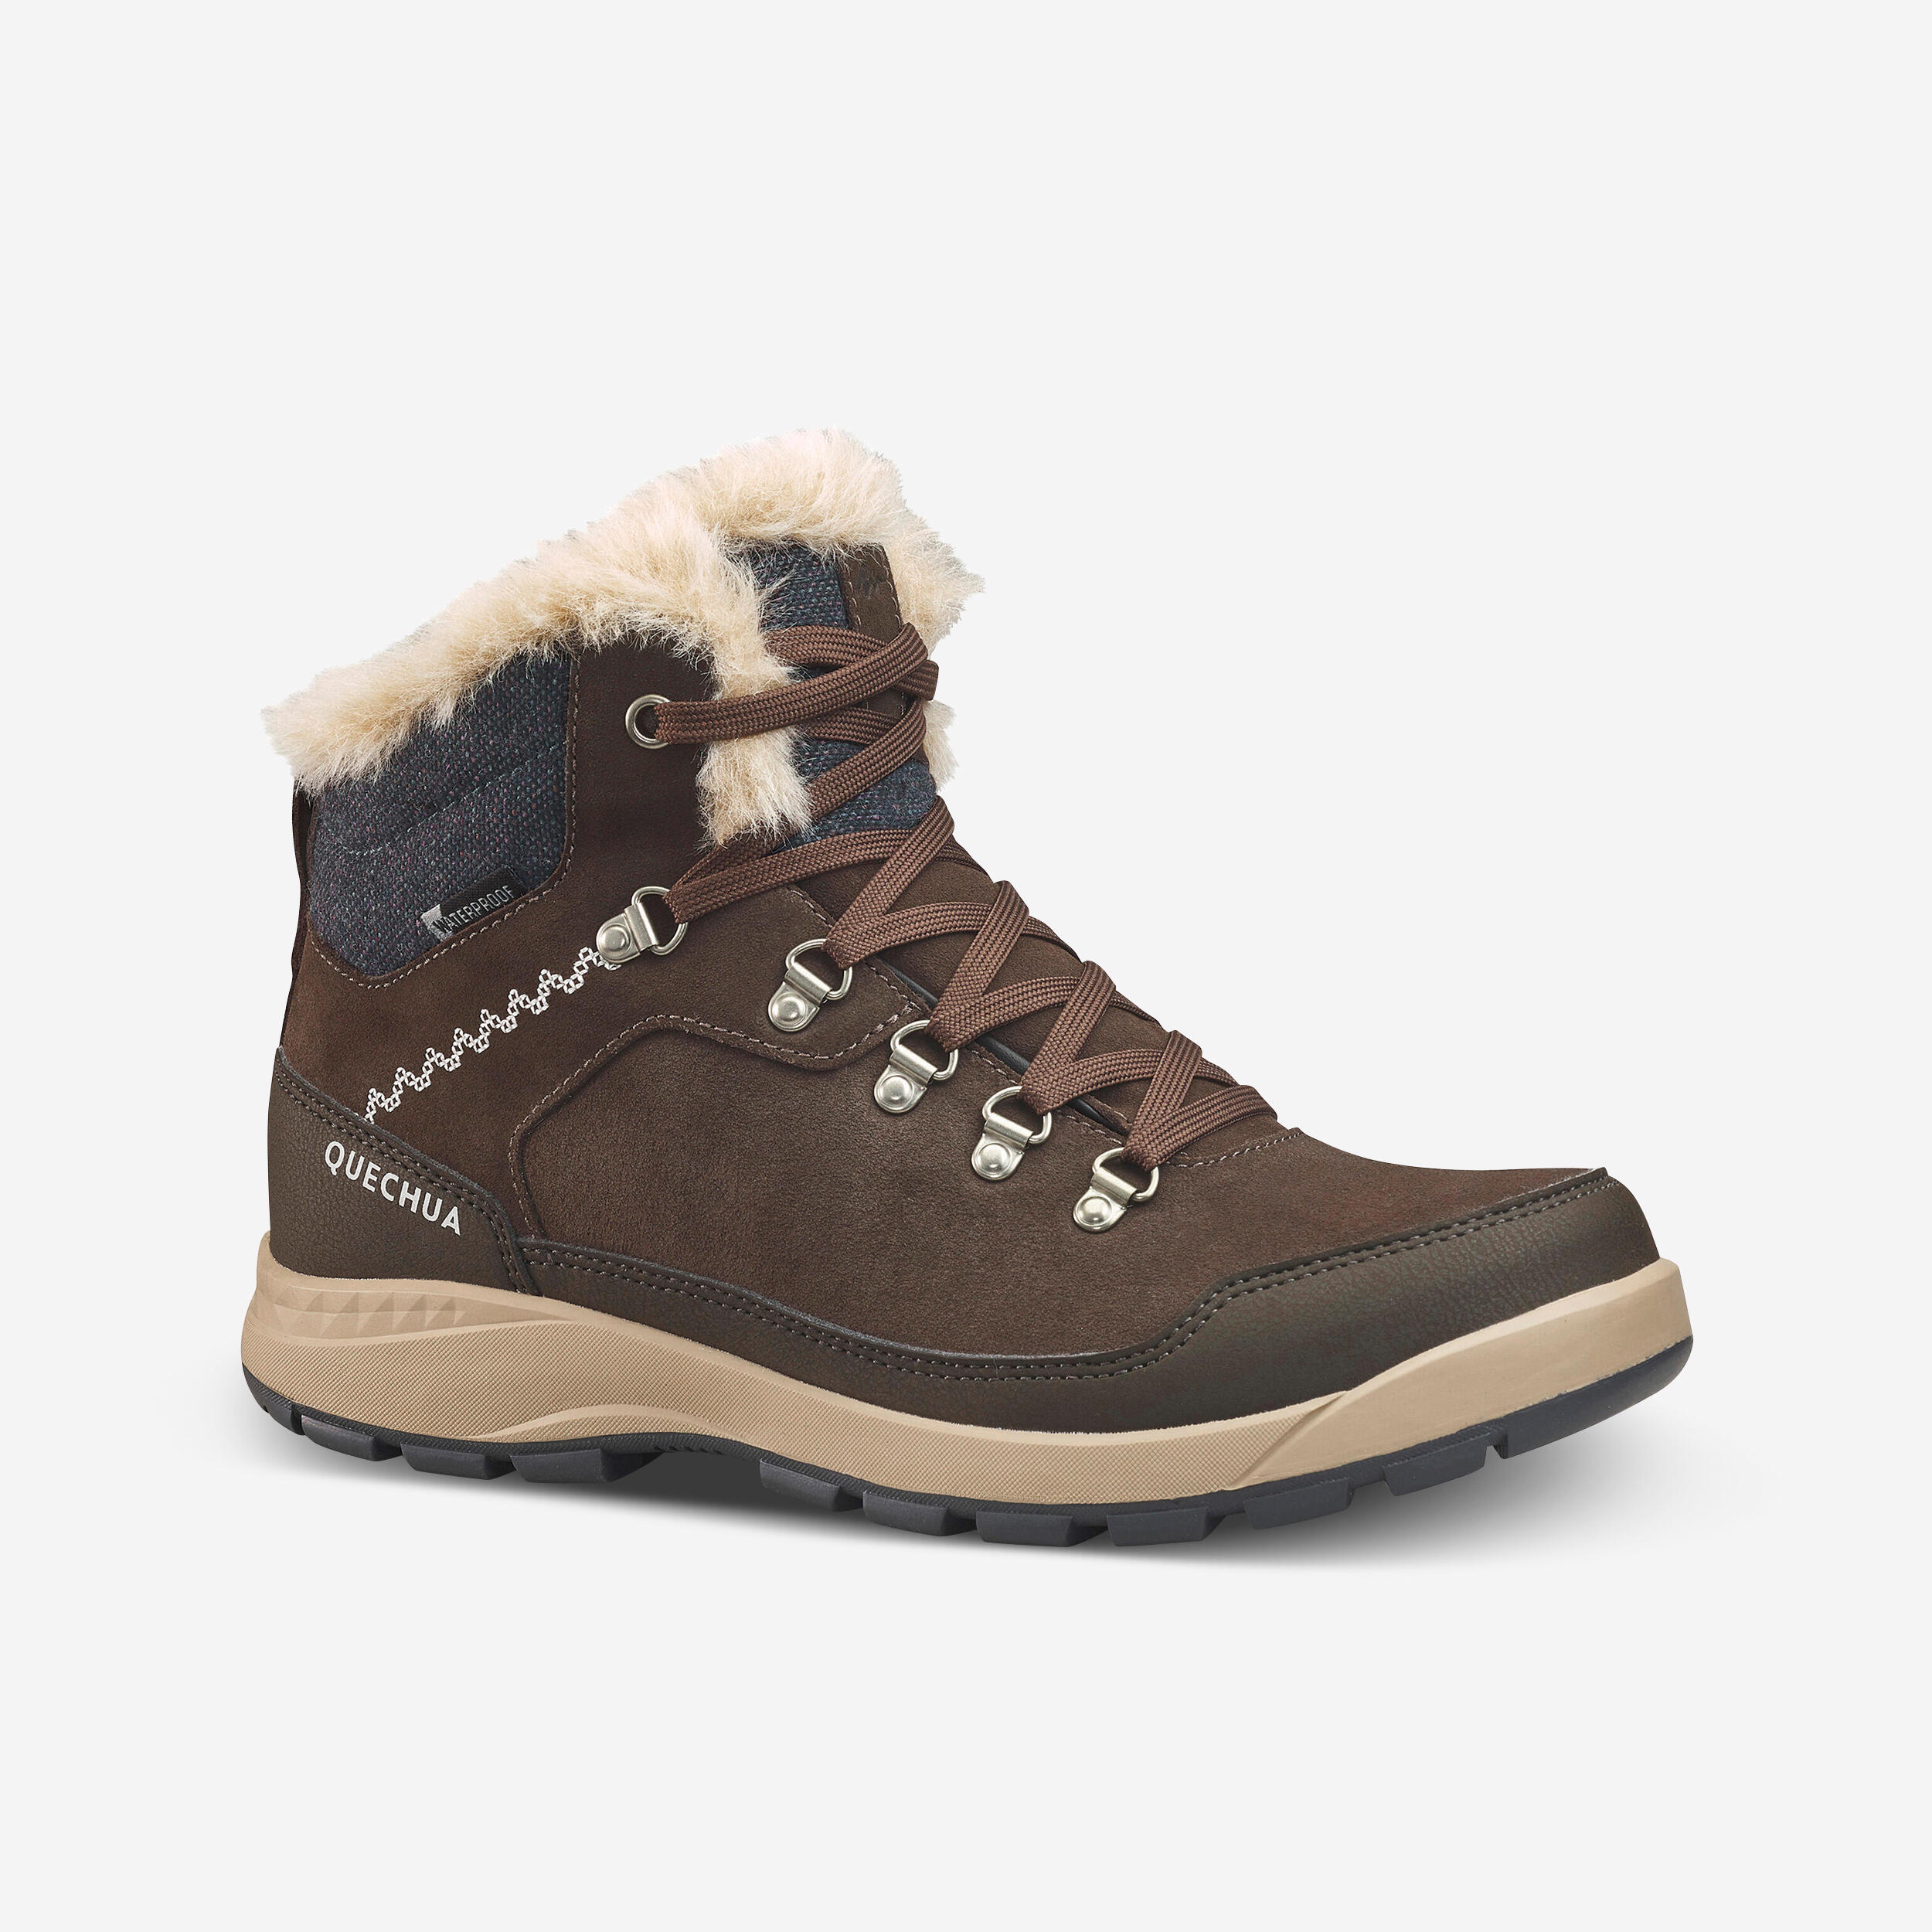 Women’s leather warm waterproof snow boots - SH900 Mid 1/5